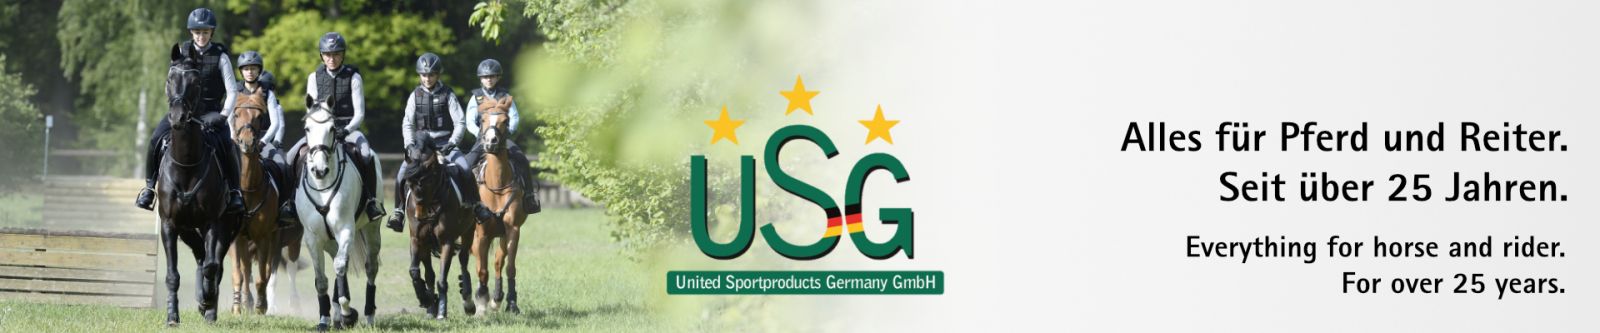 Sitemap - USG - United Sportproducts Germany GmbH